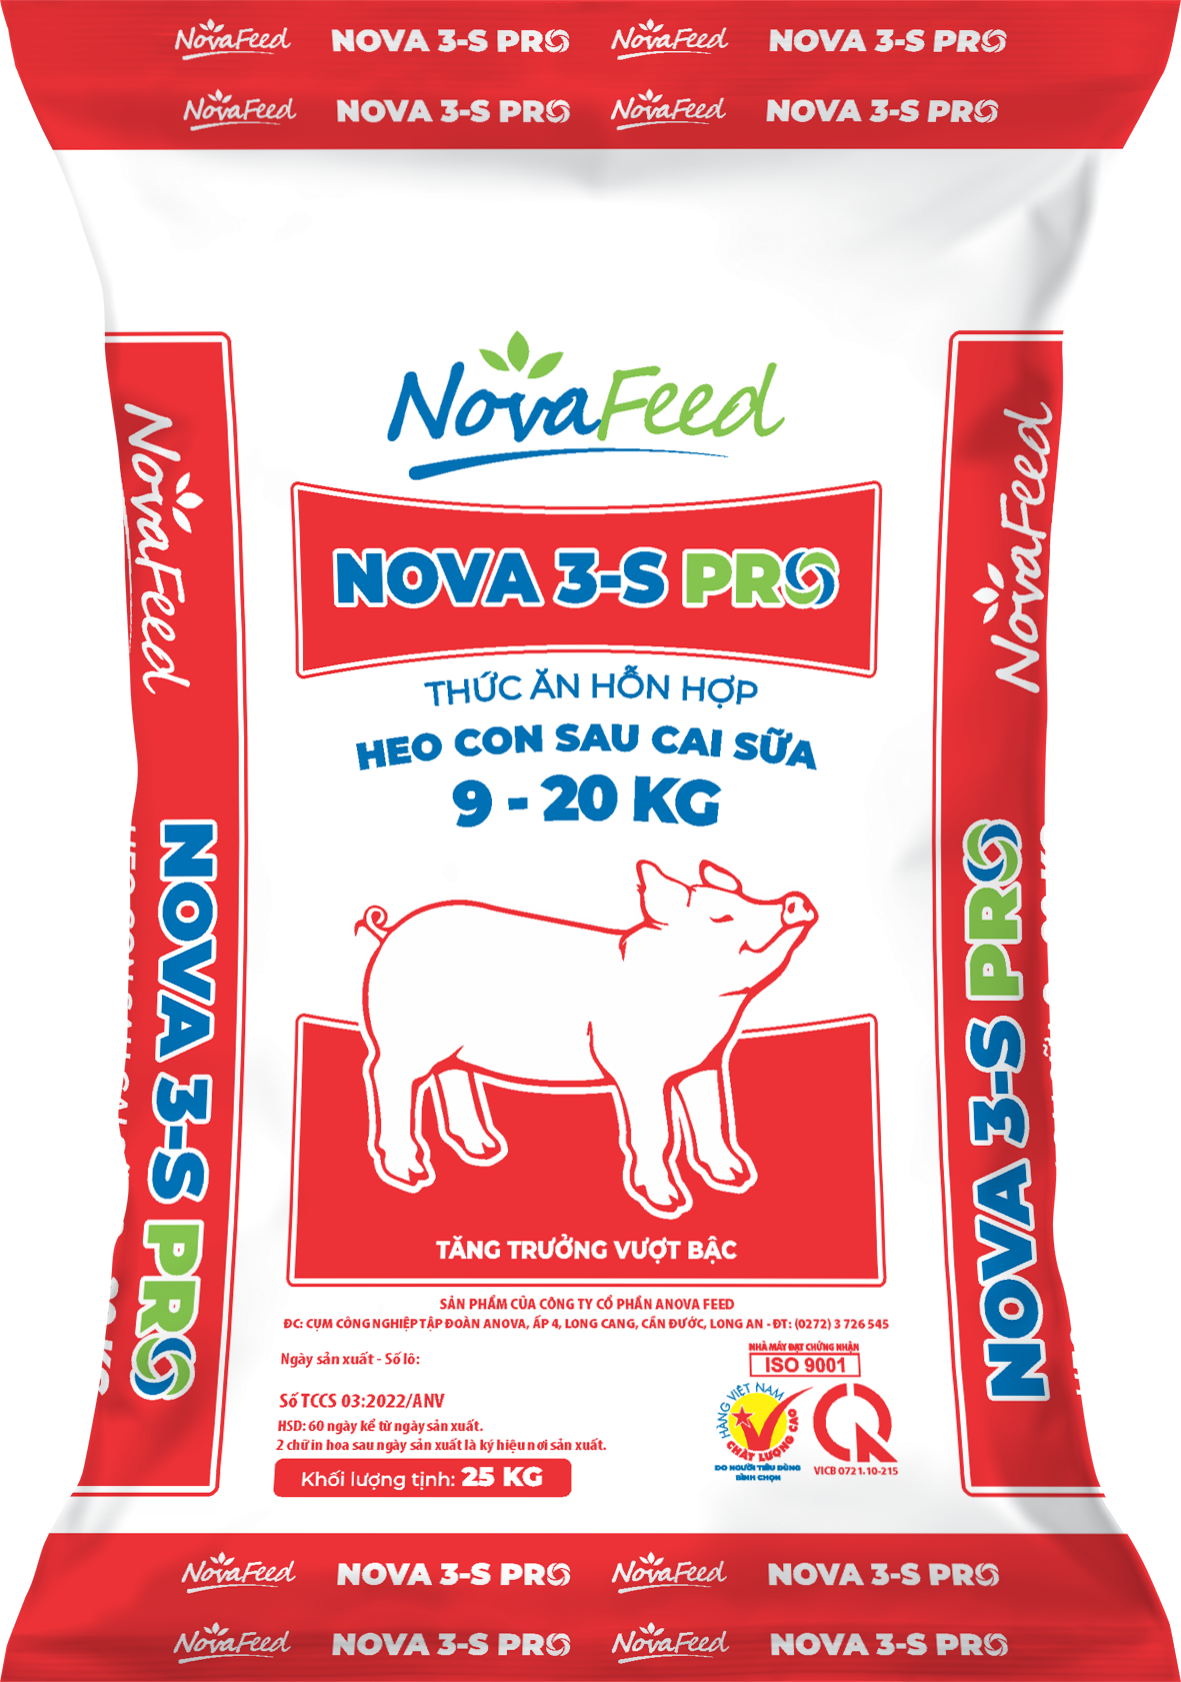 Thức ăn hỗn hợp cho heo con sau cai sữa 9 - 20kg NOVA 3-S PRO